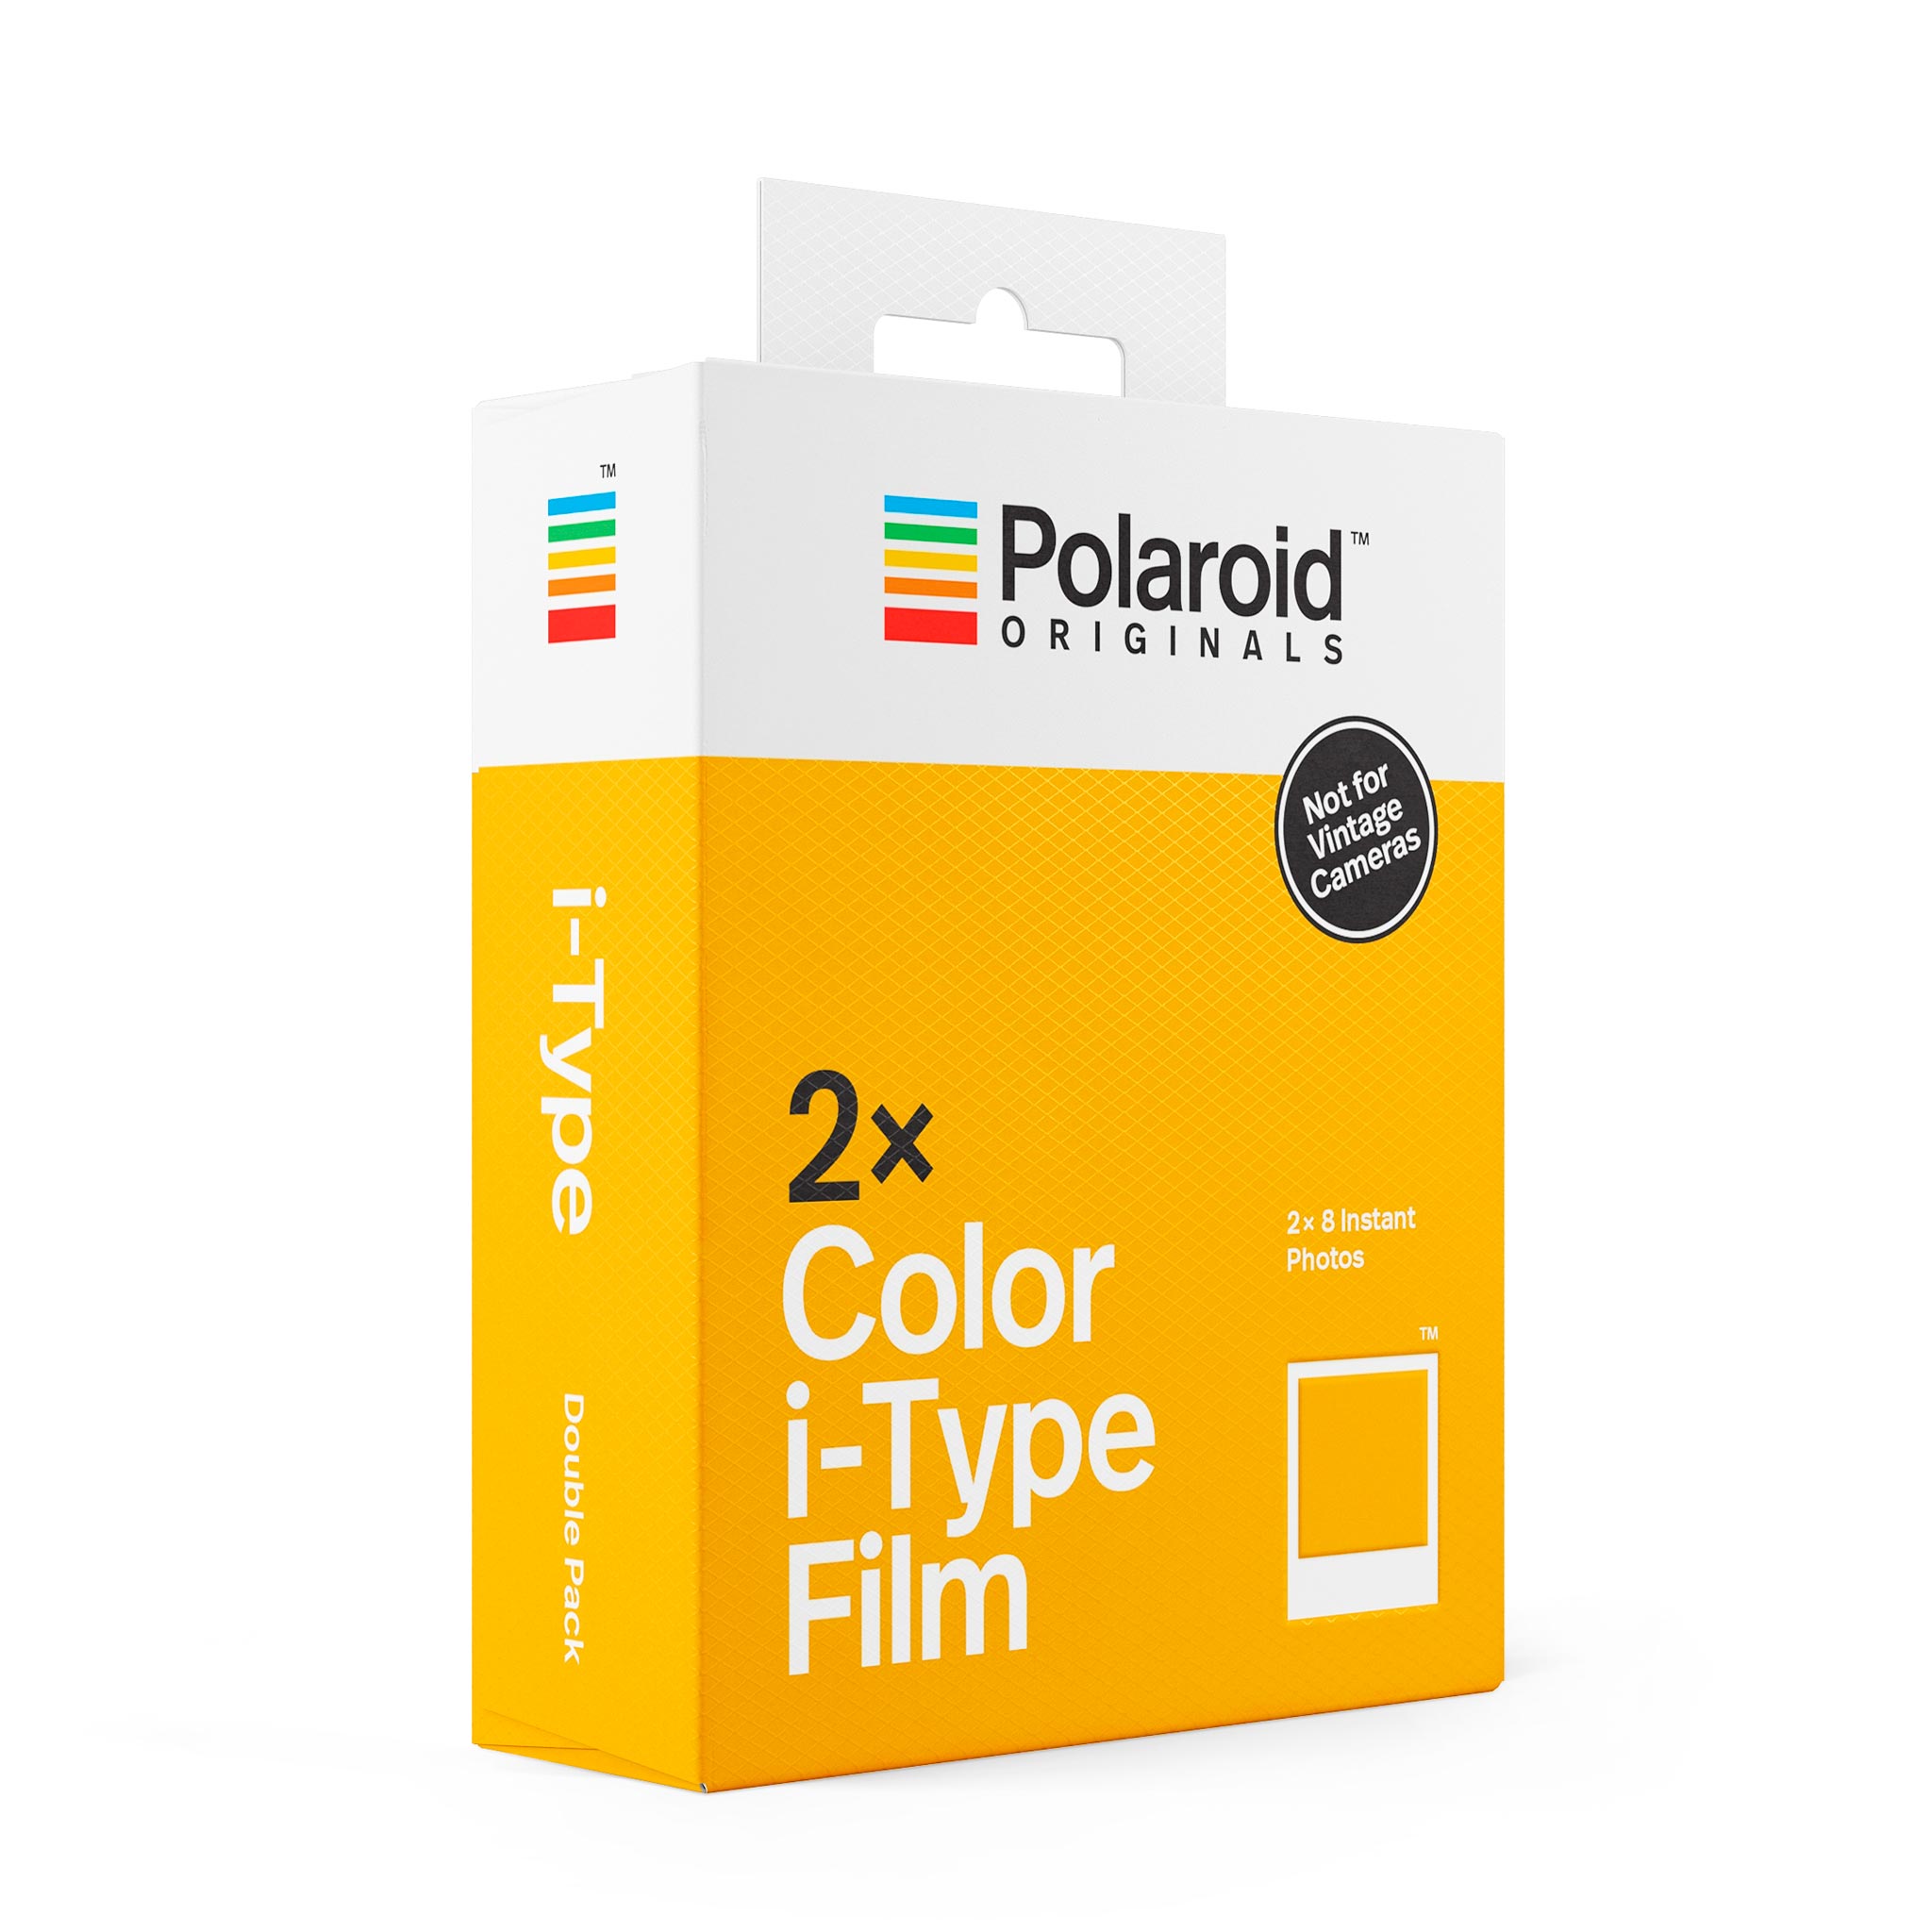 Polaroid Color i-Type Film Double Pack White Frames (6009)